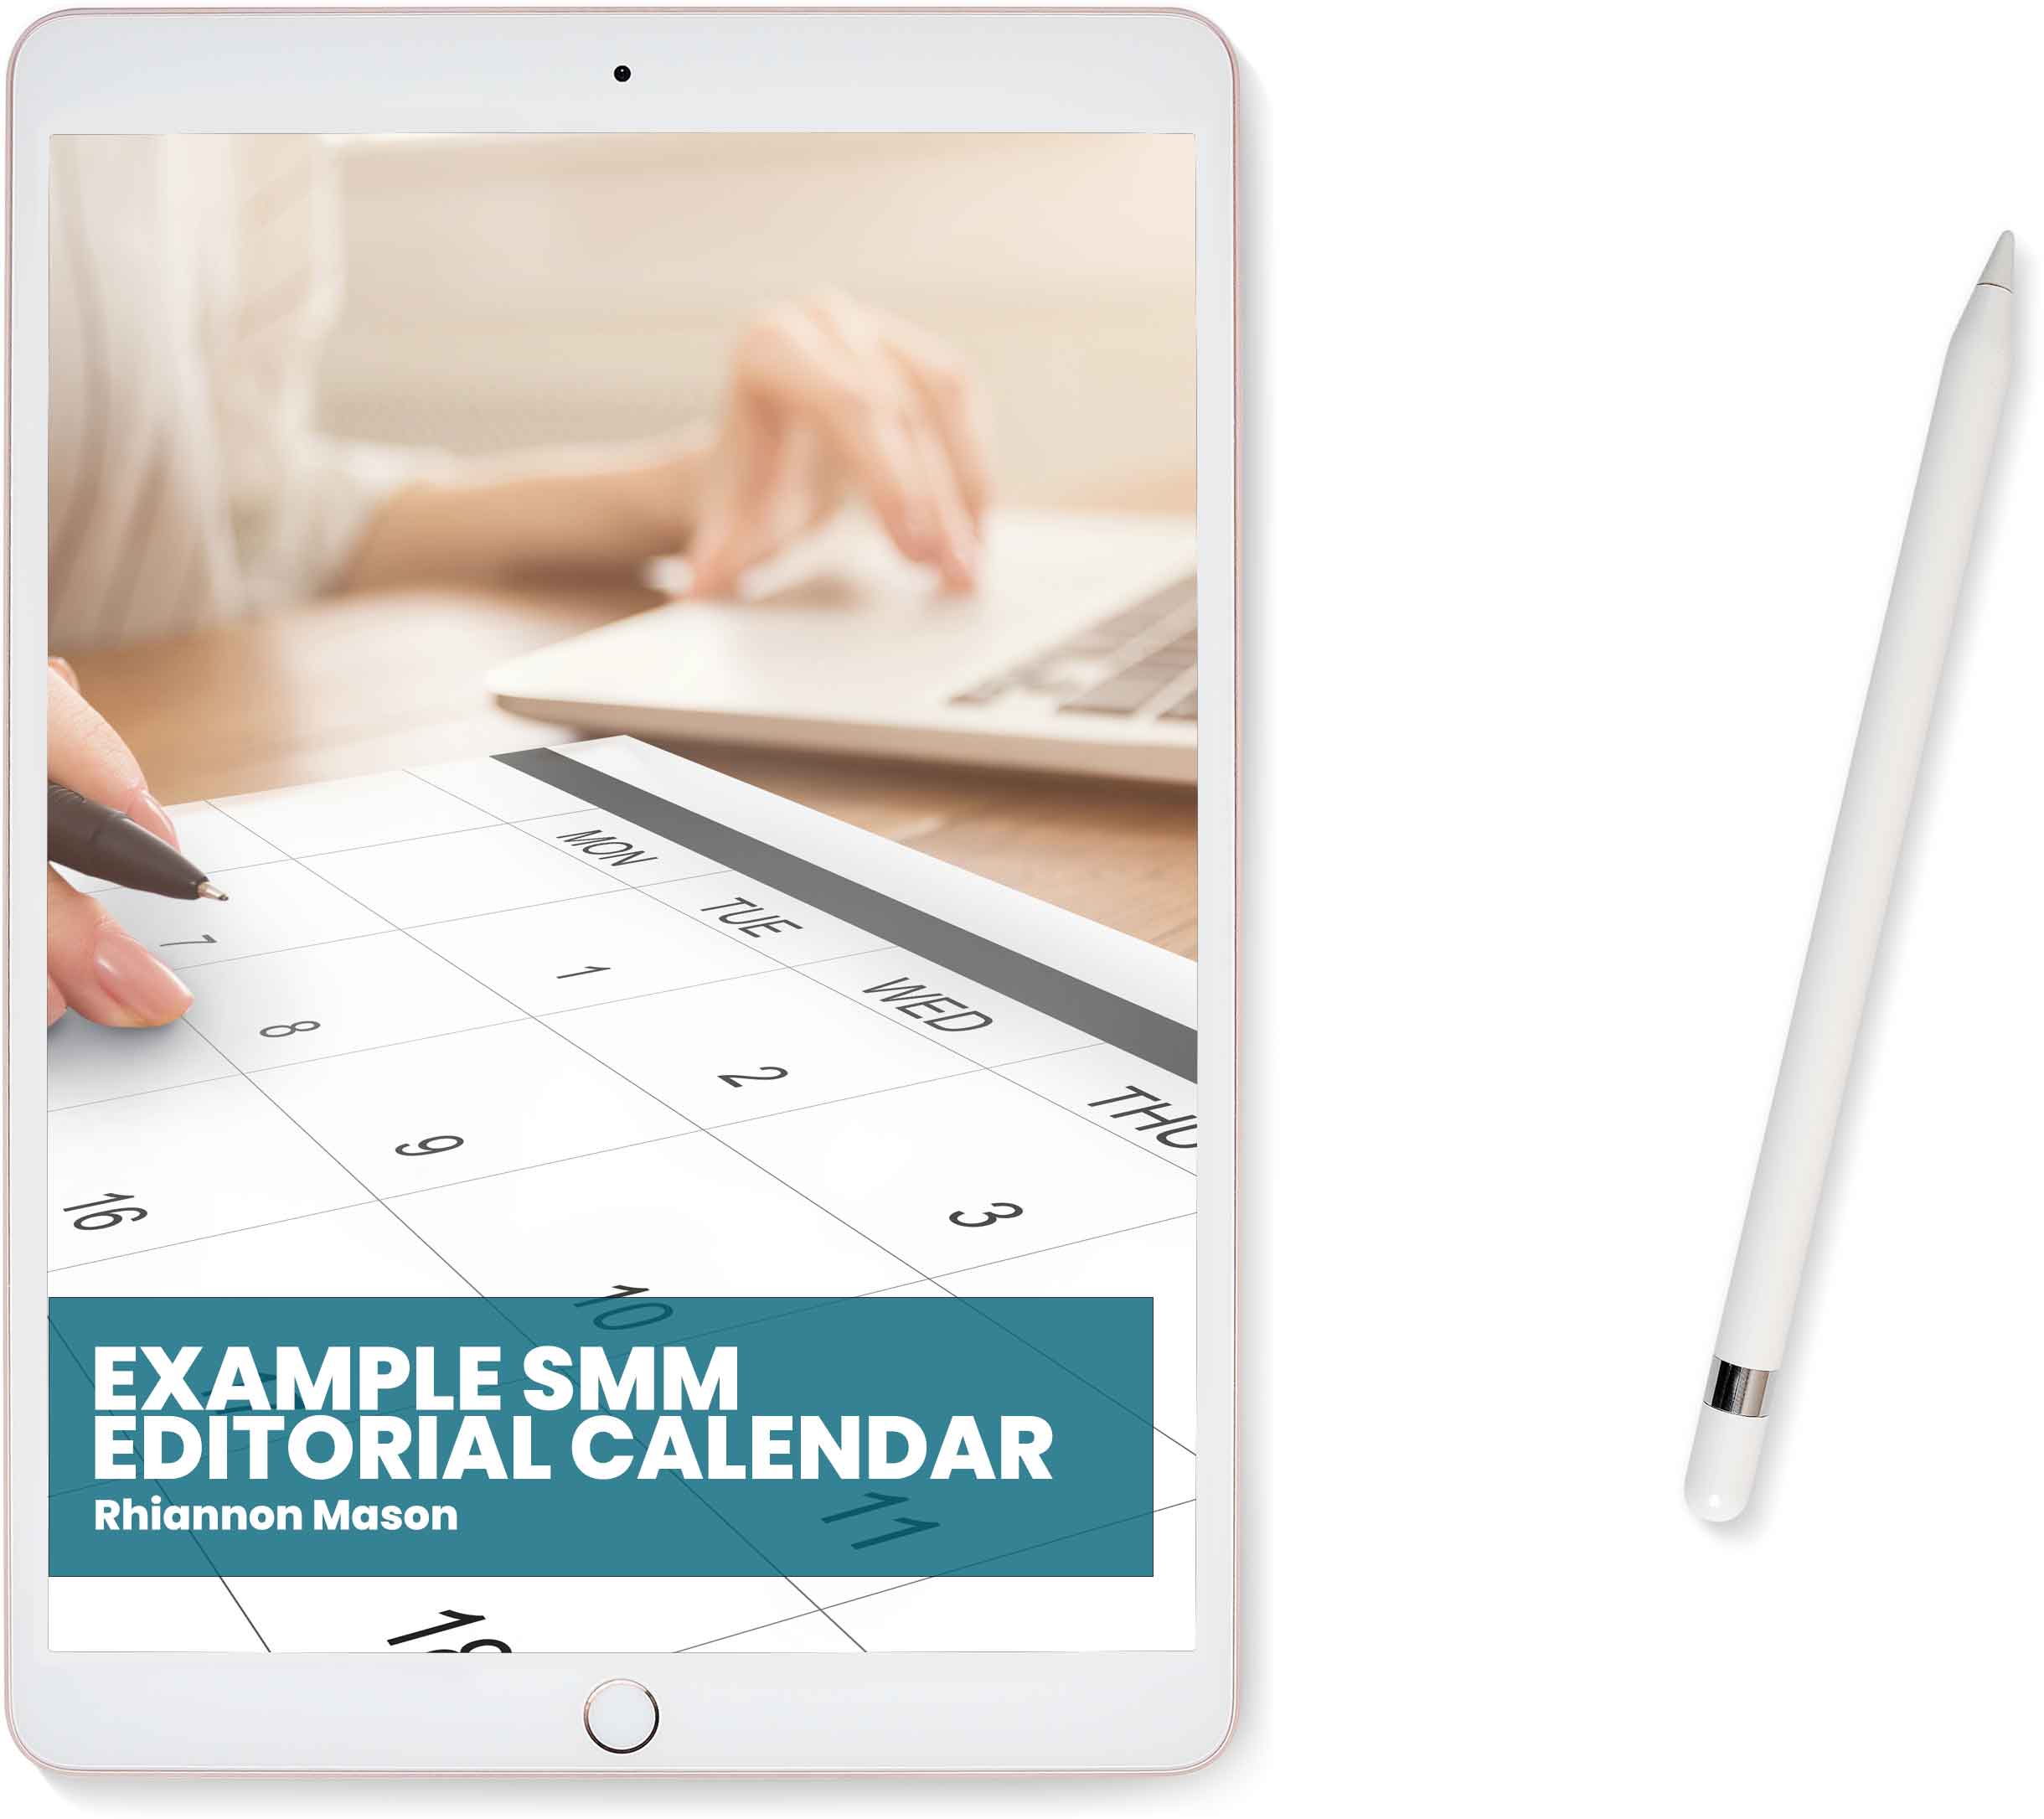 Example SMM Editorial Calendar